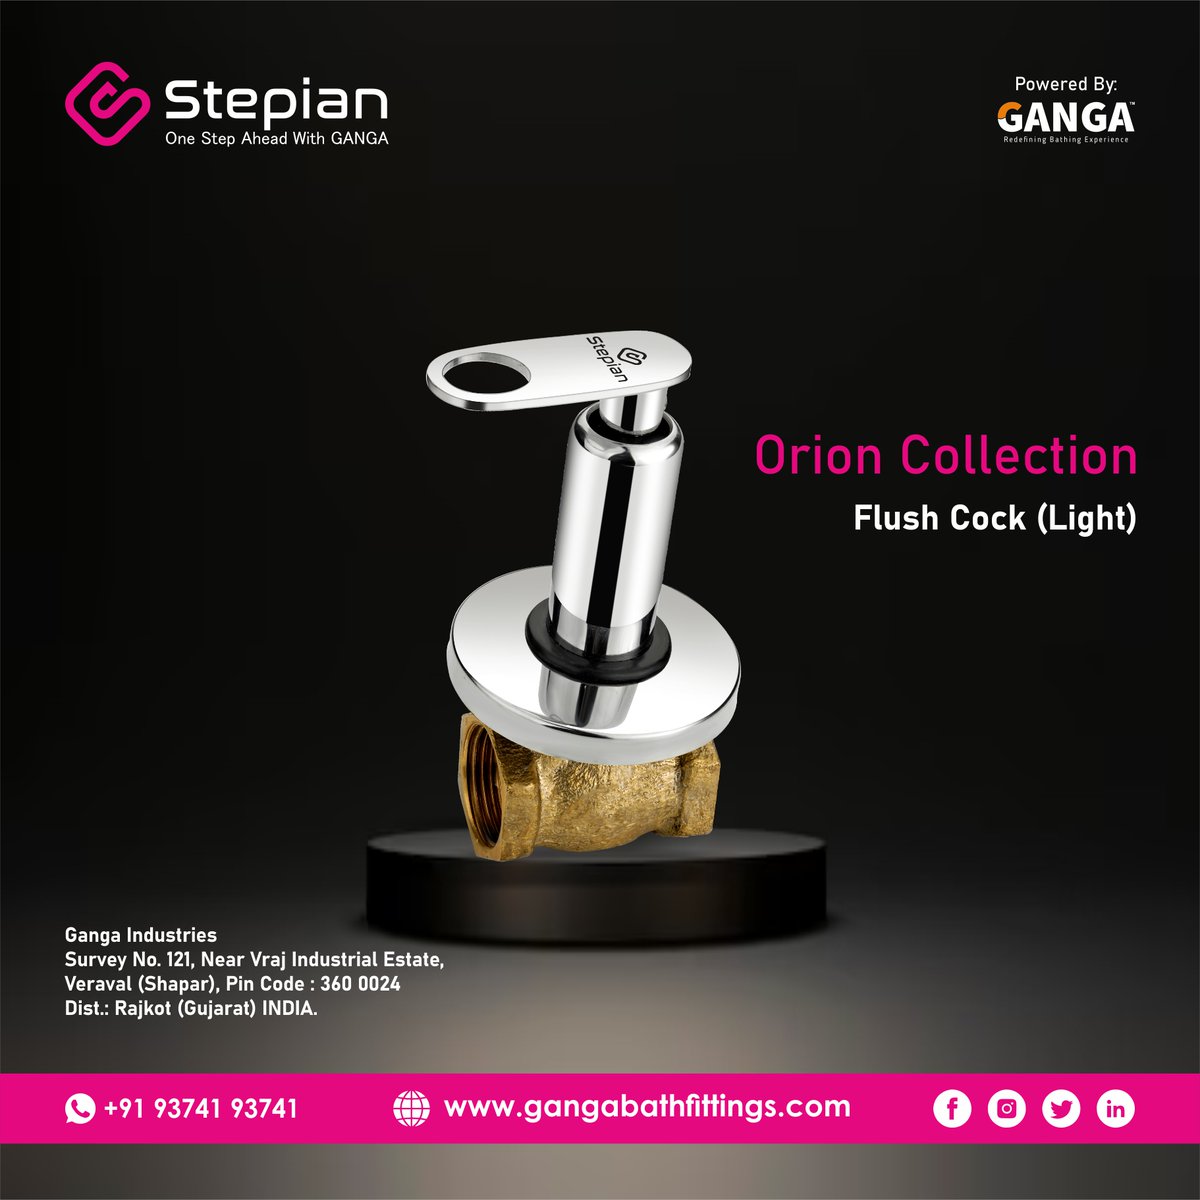 Flush Cock - Orion Collection
Contact No. : +91 93741 93741

Address : Ganga Industries
Survey No. 121 SIDC Main road,
Nr. Vraj Industrial Estate,
Veraval (Shapar) 360024,
Gujarat - India

#CPBathFittings #faucets #stepian #stepianbathfittings